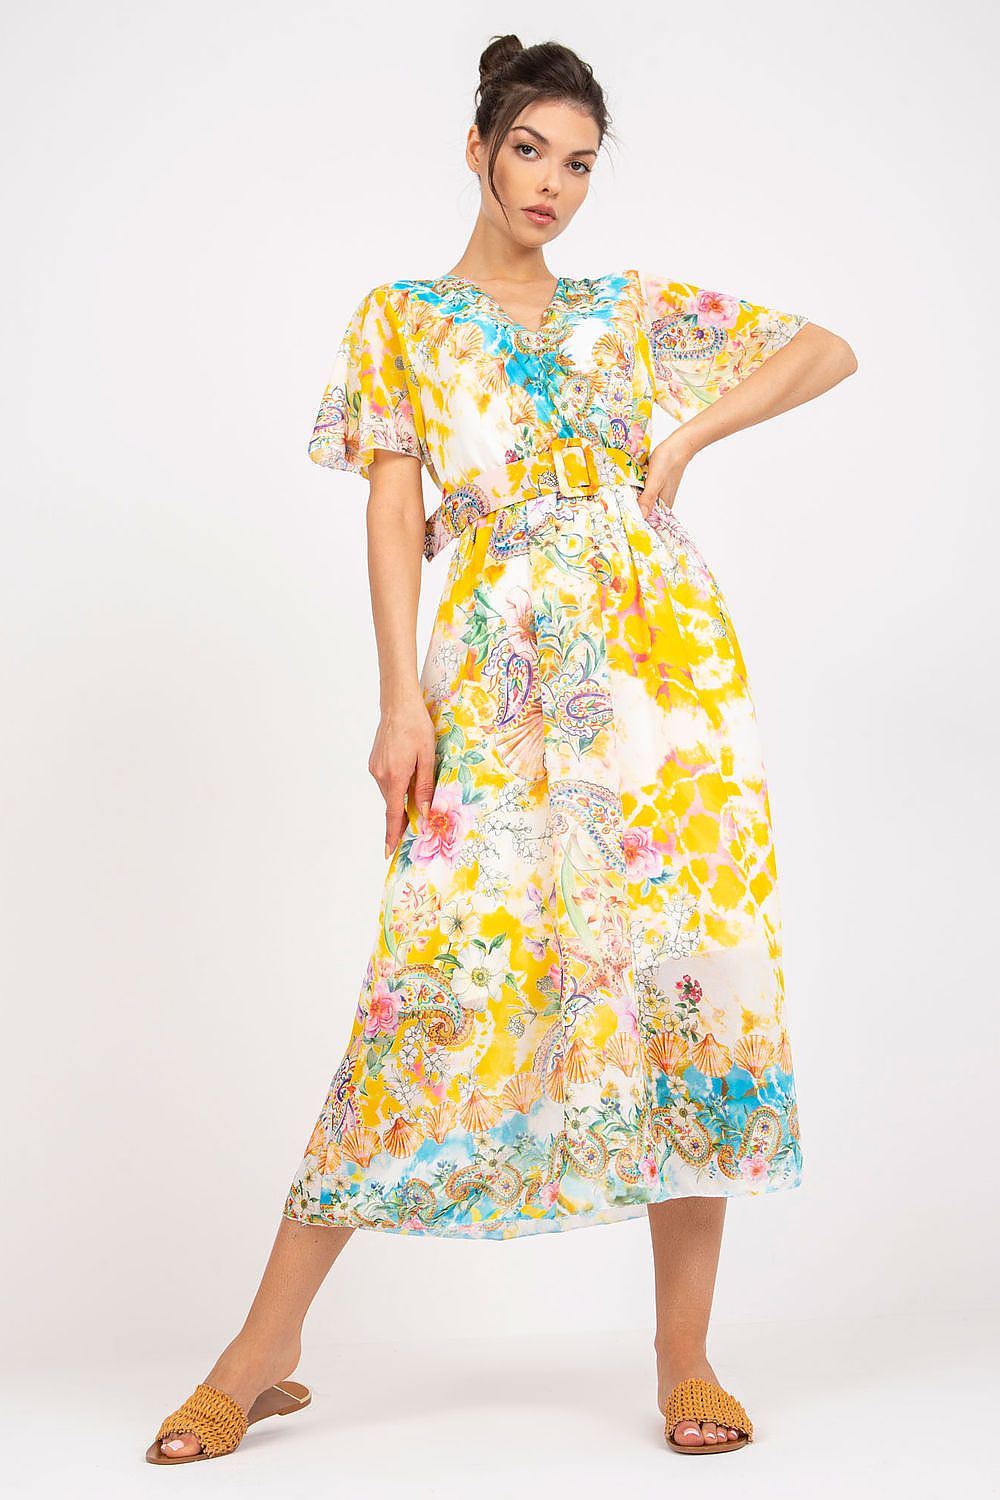 Yellow Spring Dress by Italy Moda